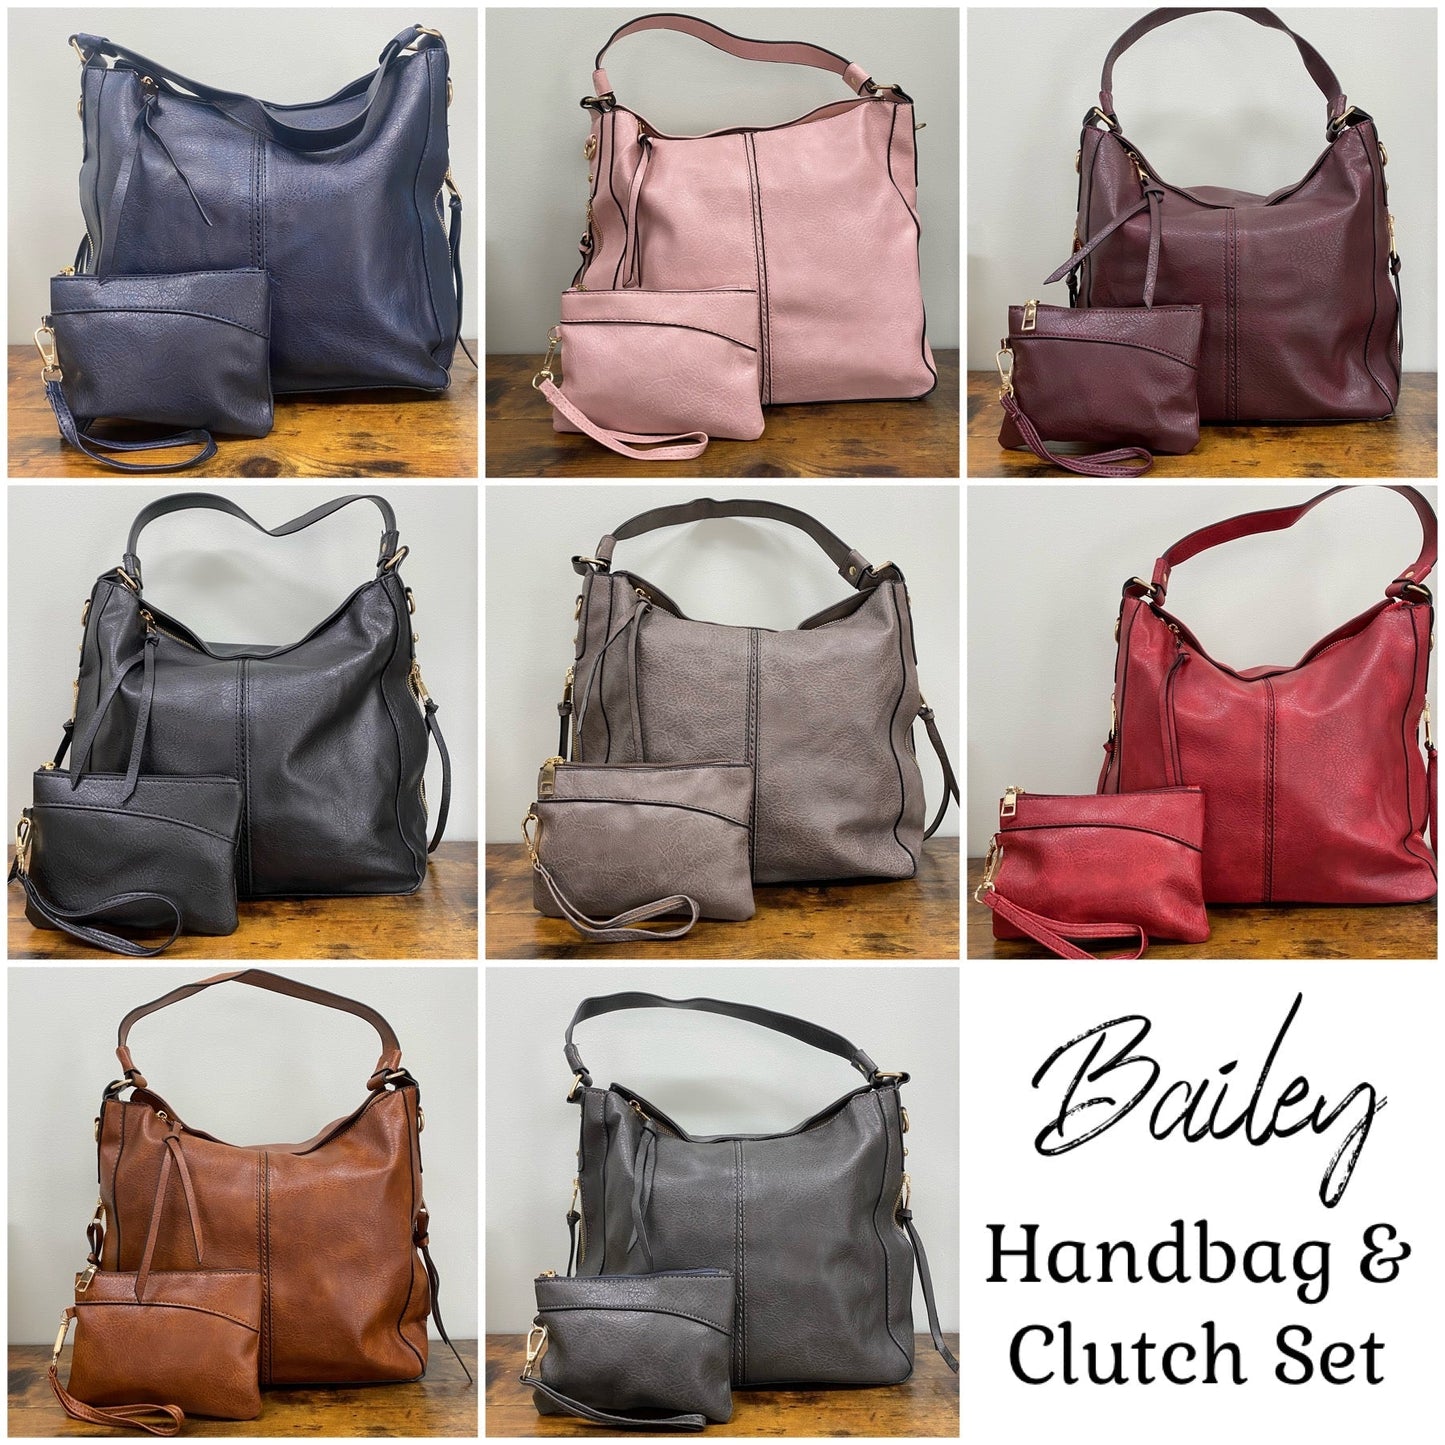 Bailey Handbag & Clutch - 2 Piece Set LOCAL PICK UP OPTION